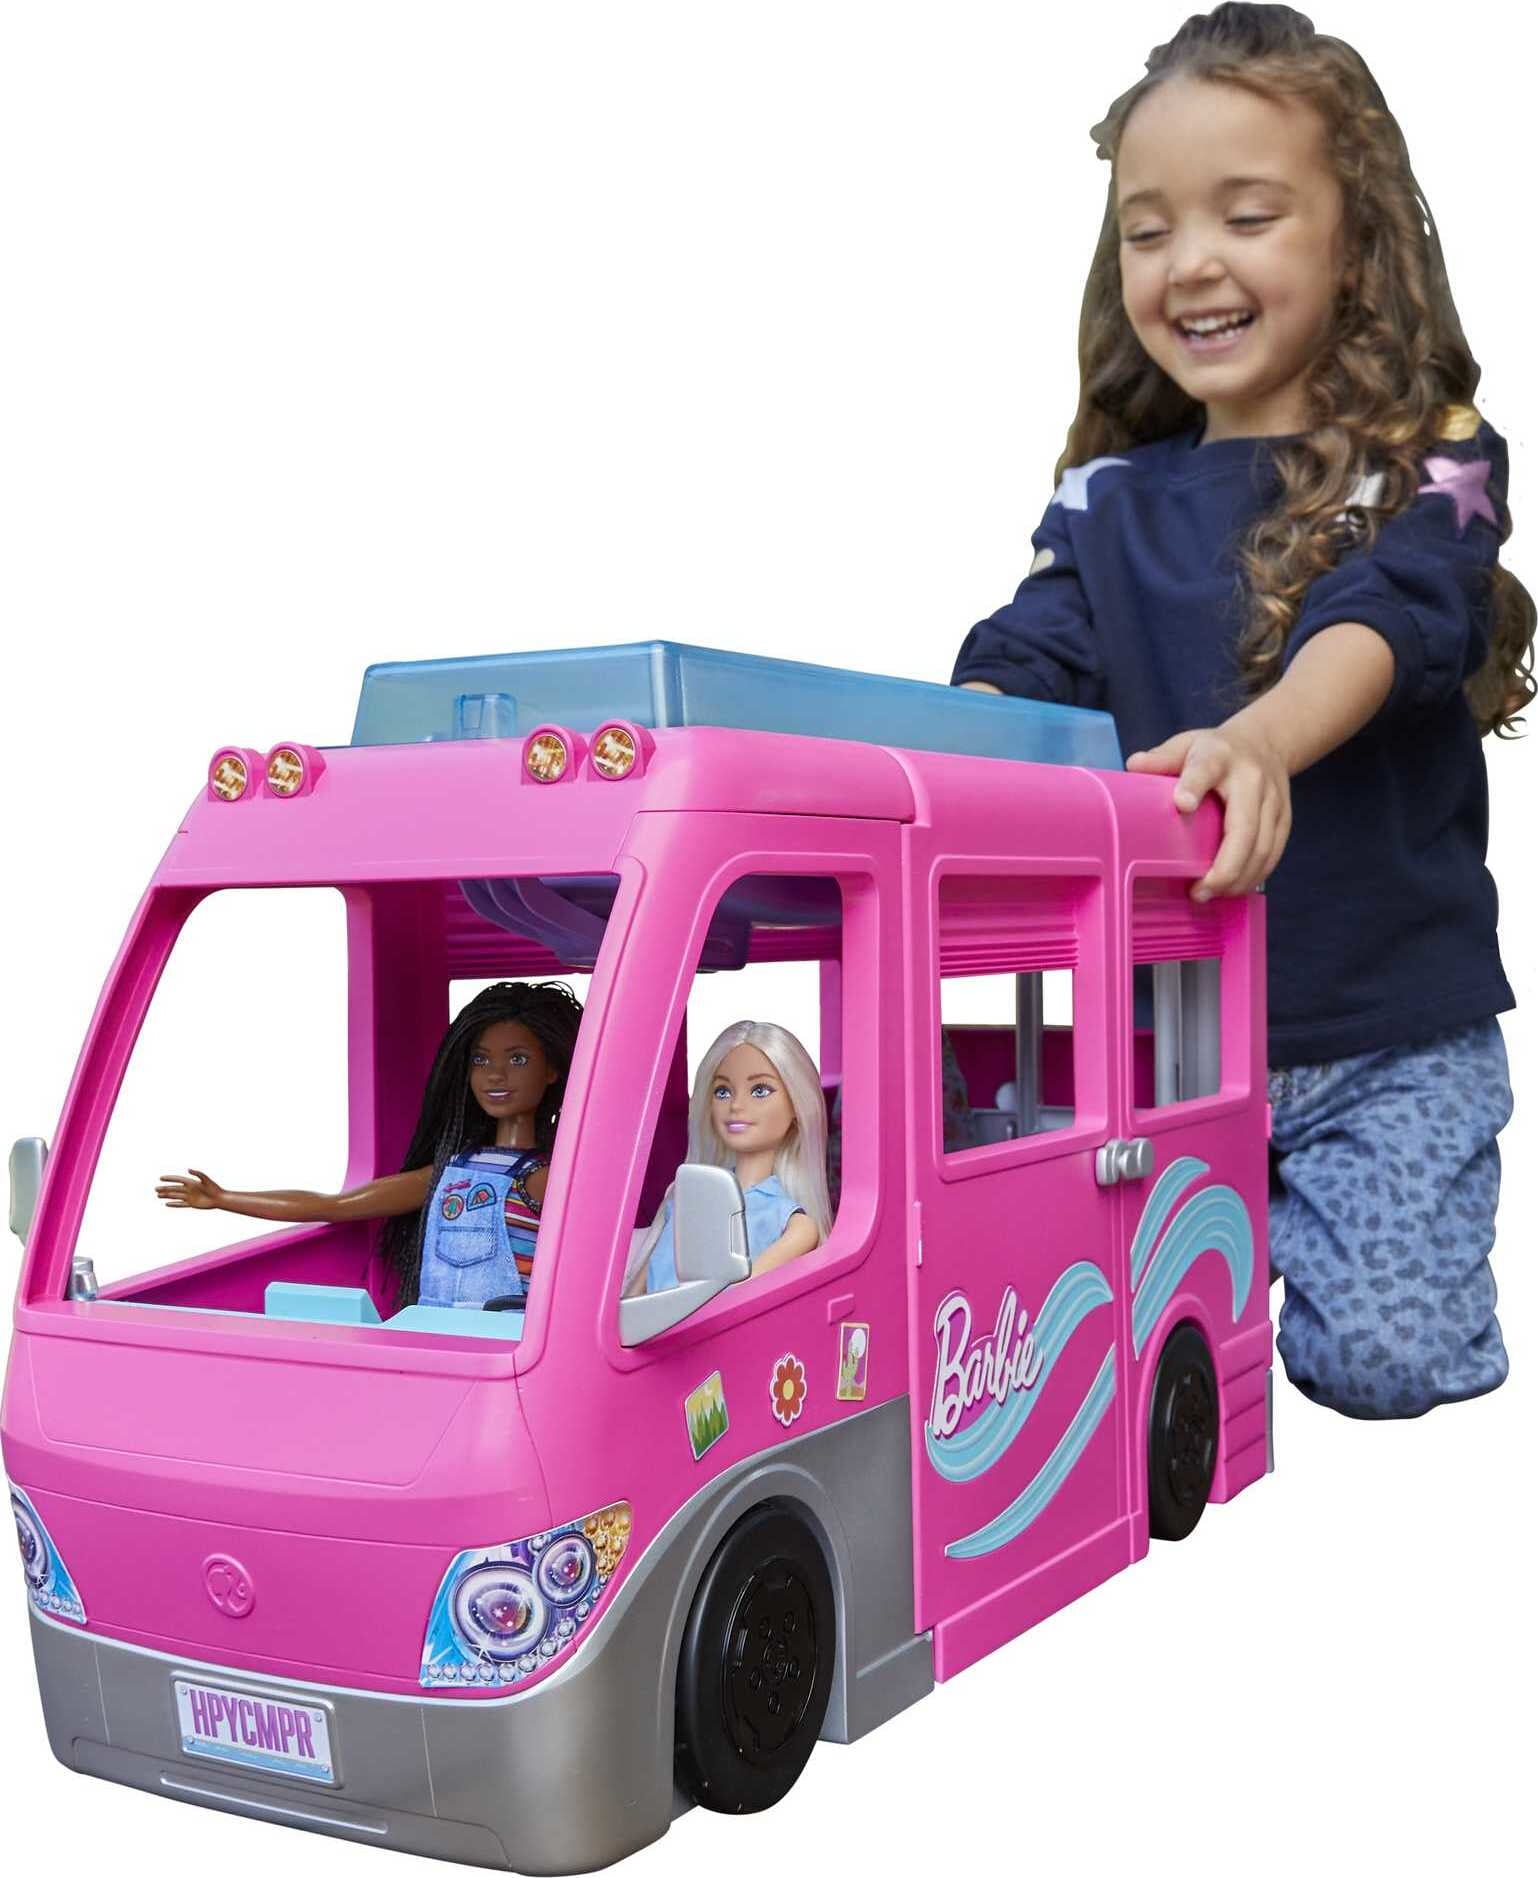 Barbie Camper, Doll Playset with 60 Accessories, 30-Inch Slide, Dream Camper